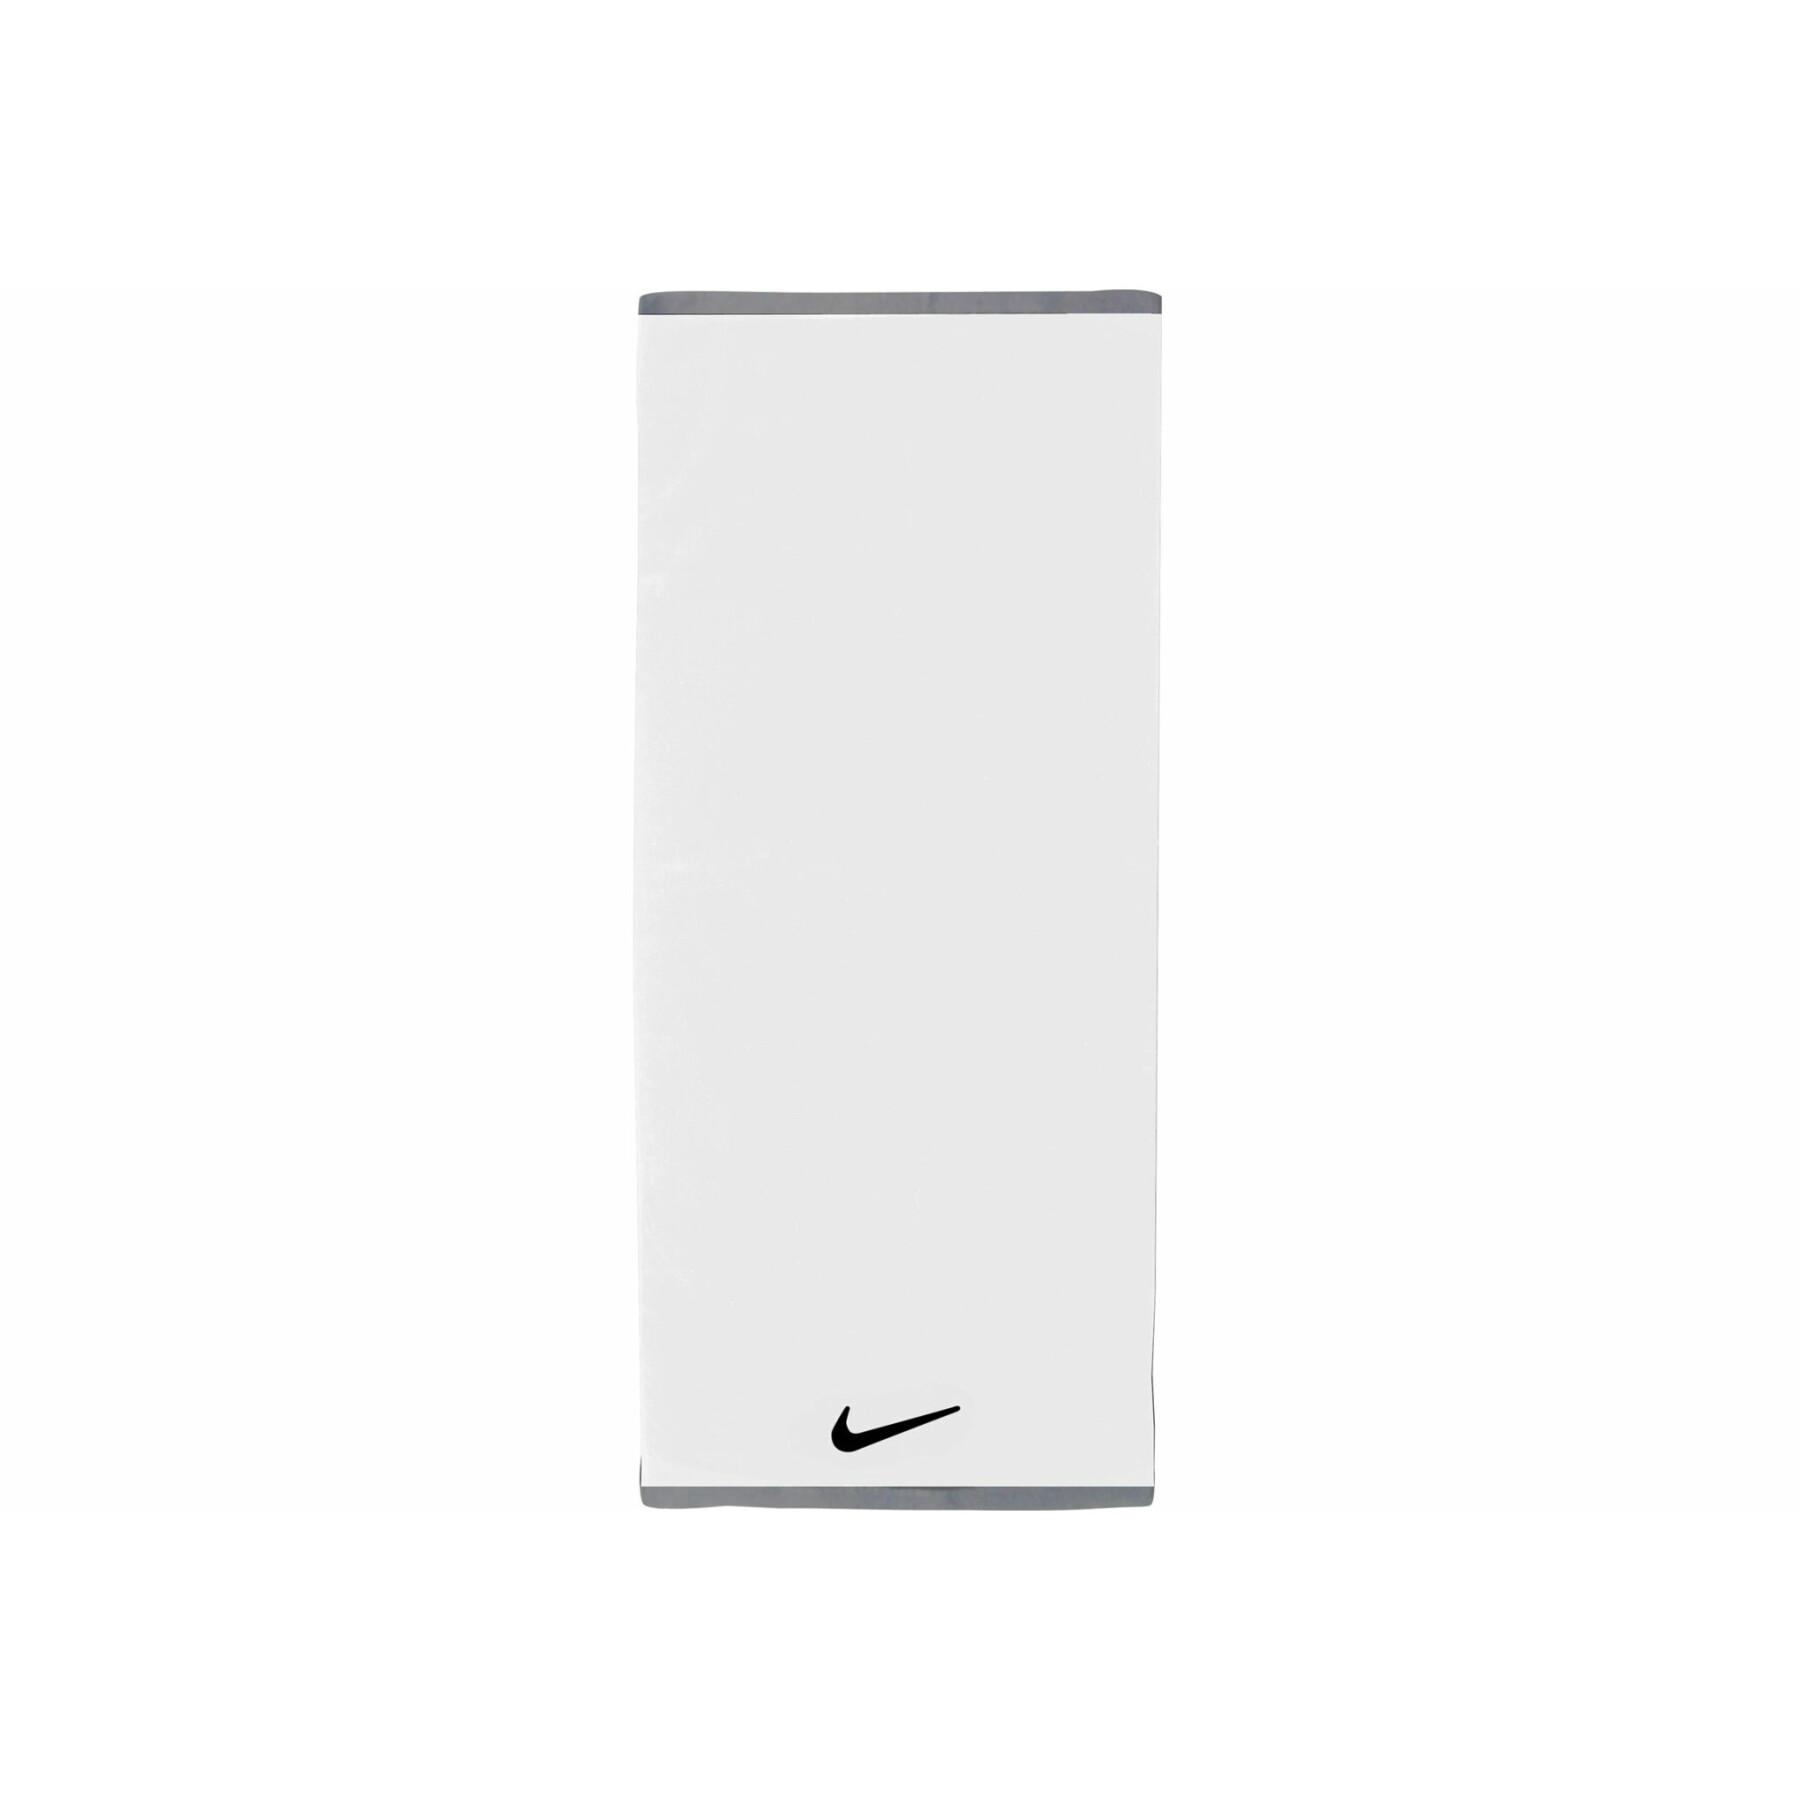 Towel Nike fundamental - Towels - Accessories -